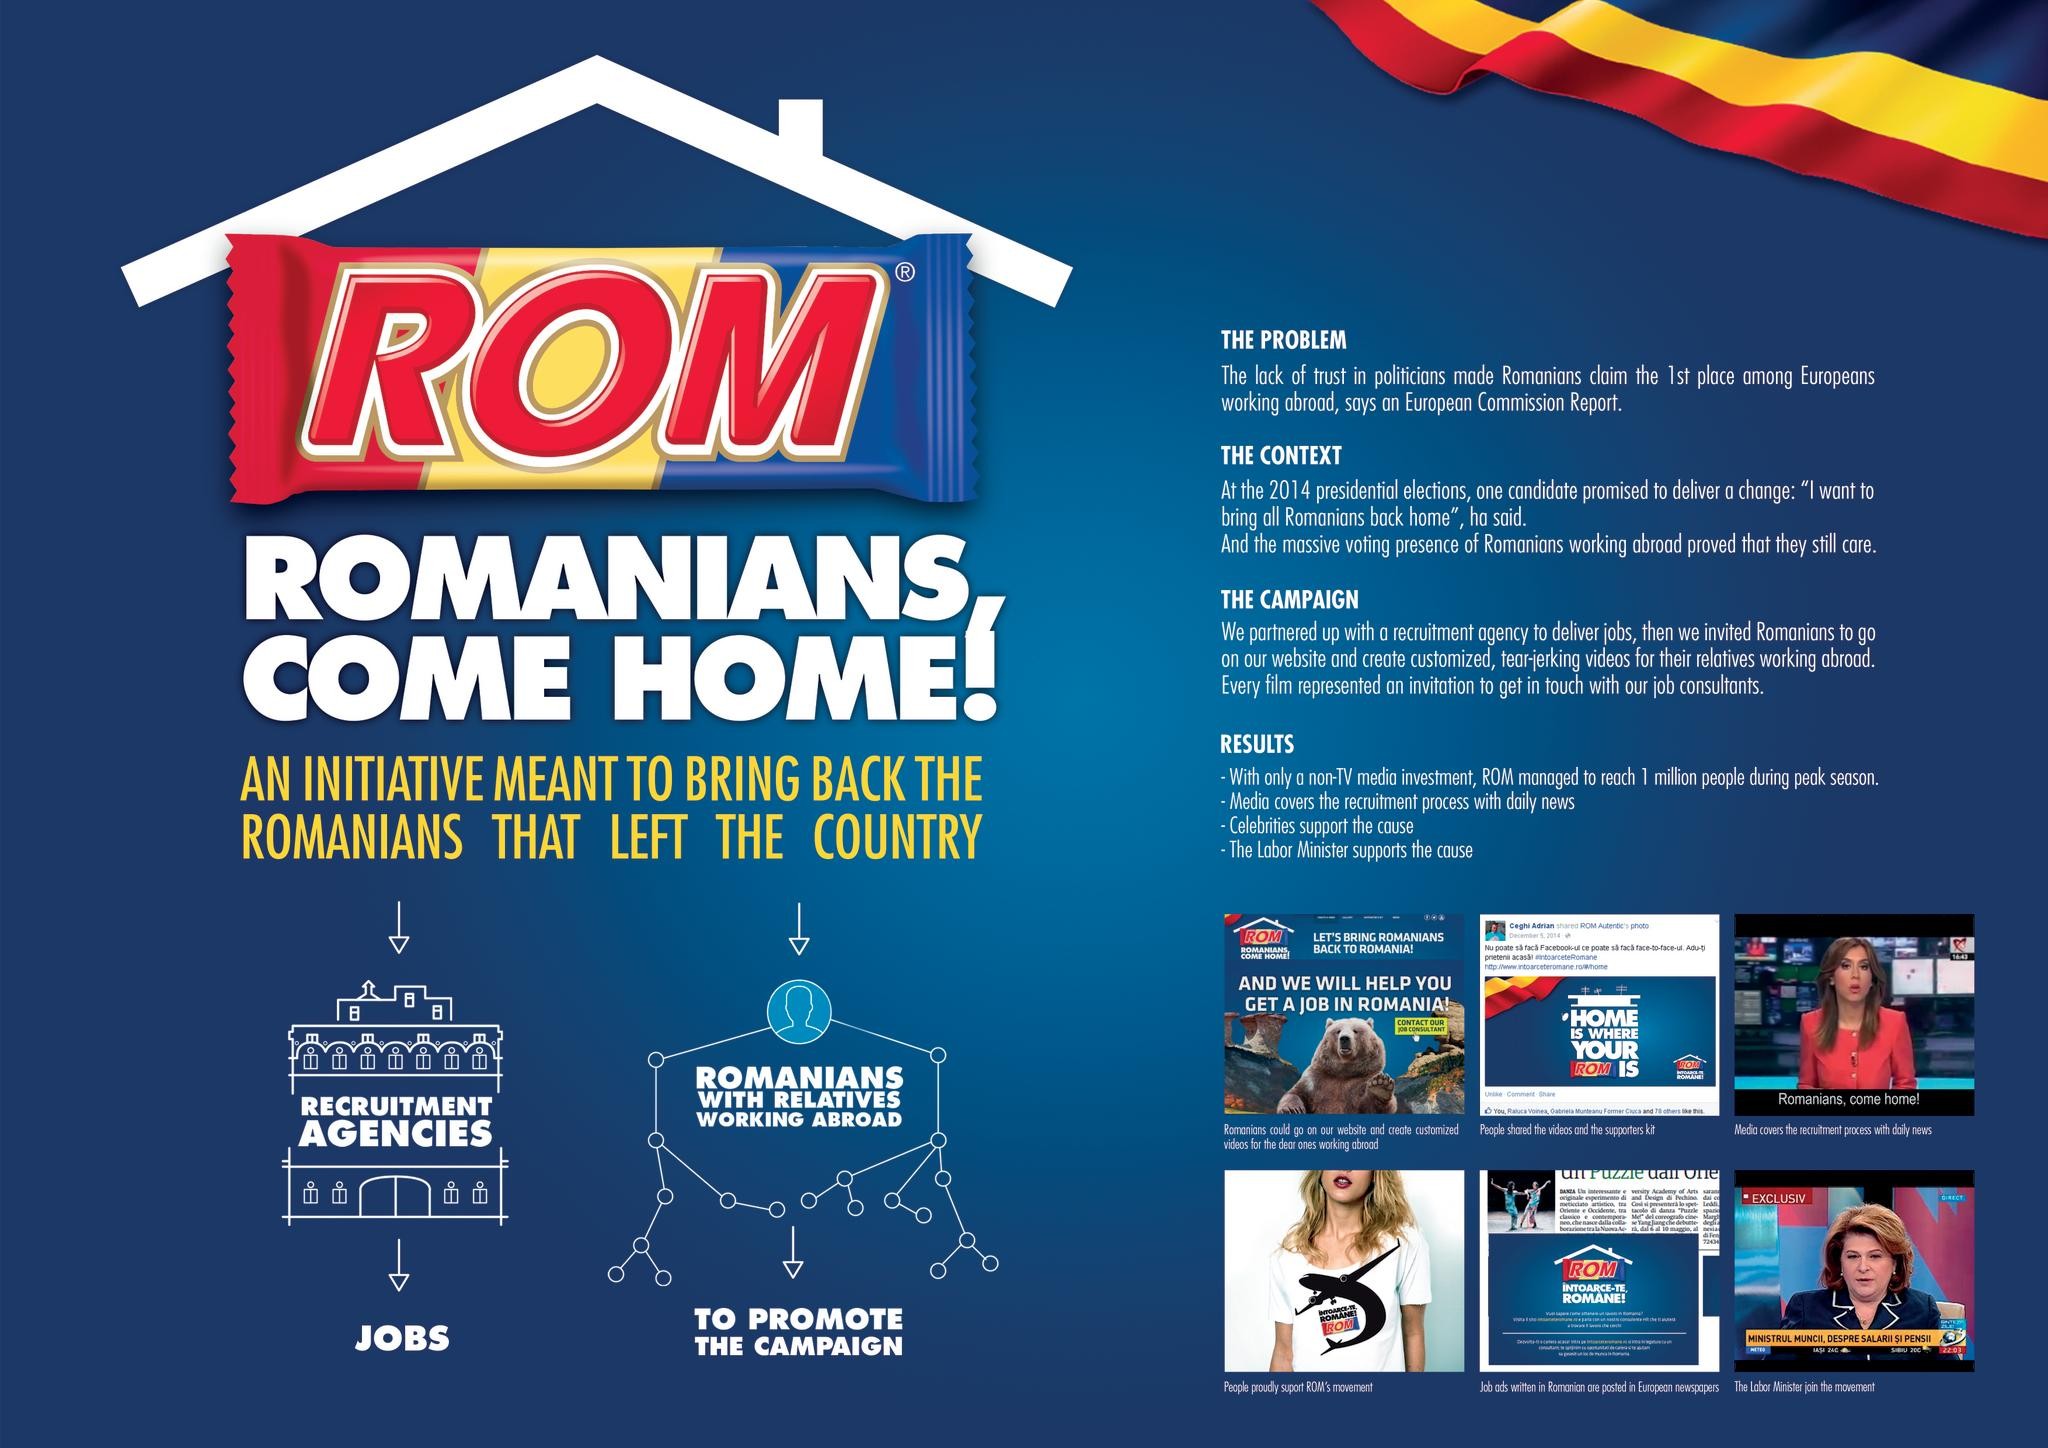 ROMANIANS, COME HOME!